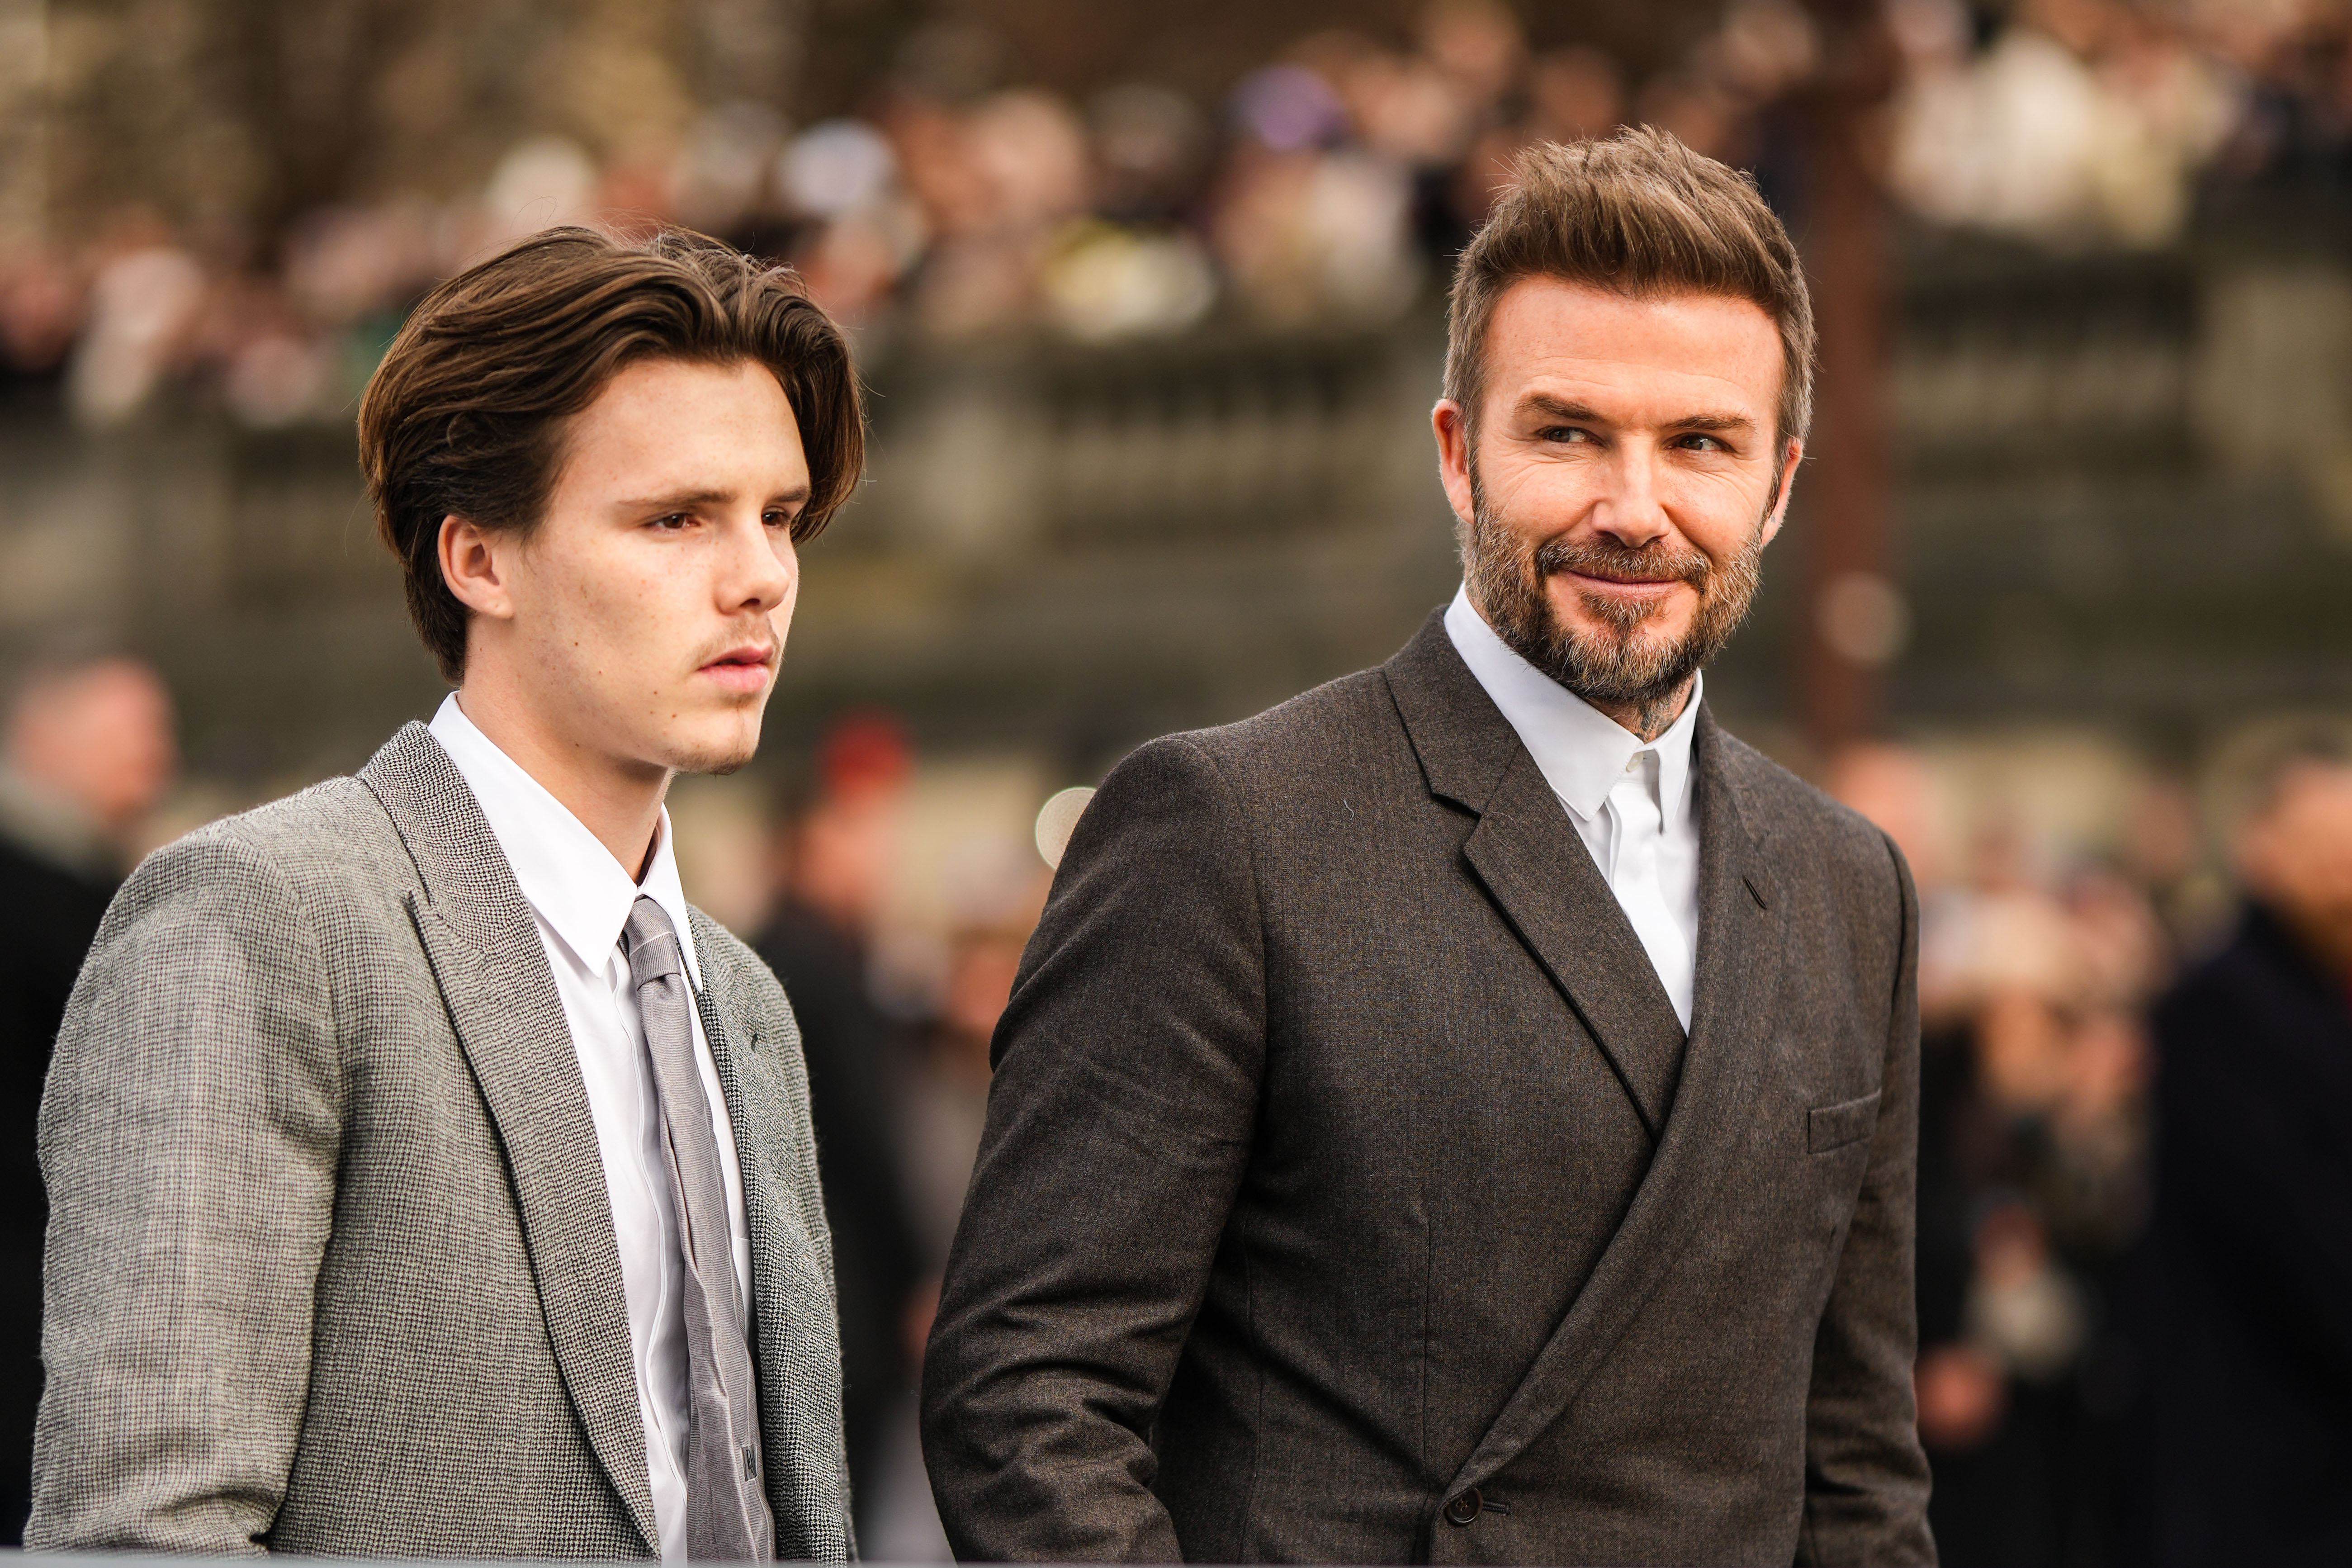 Cruz Beckham and David Beckham attending Paris Fashion Week on January 20, 2023 | Source: Getty Images